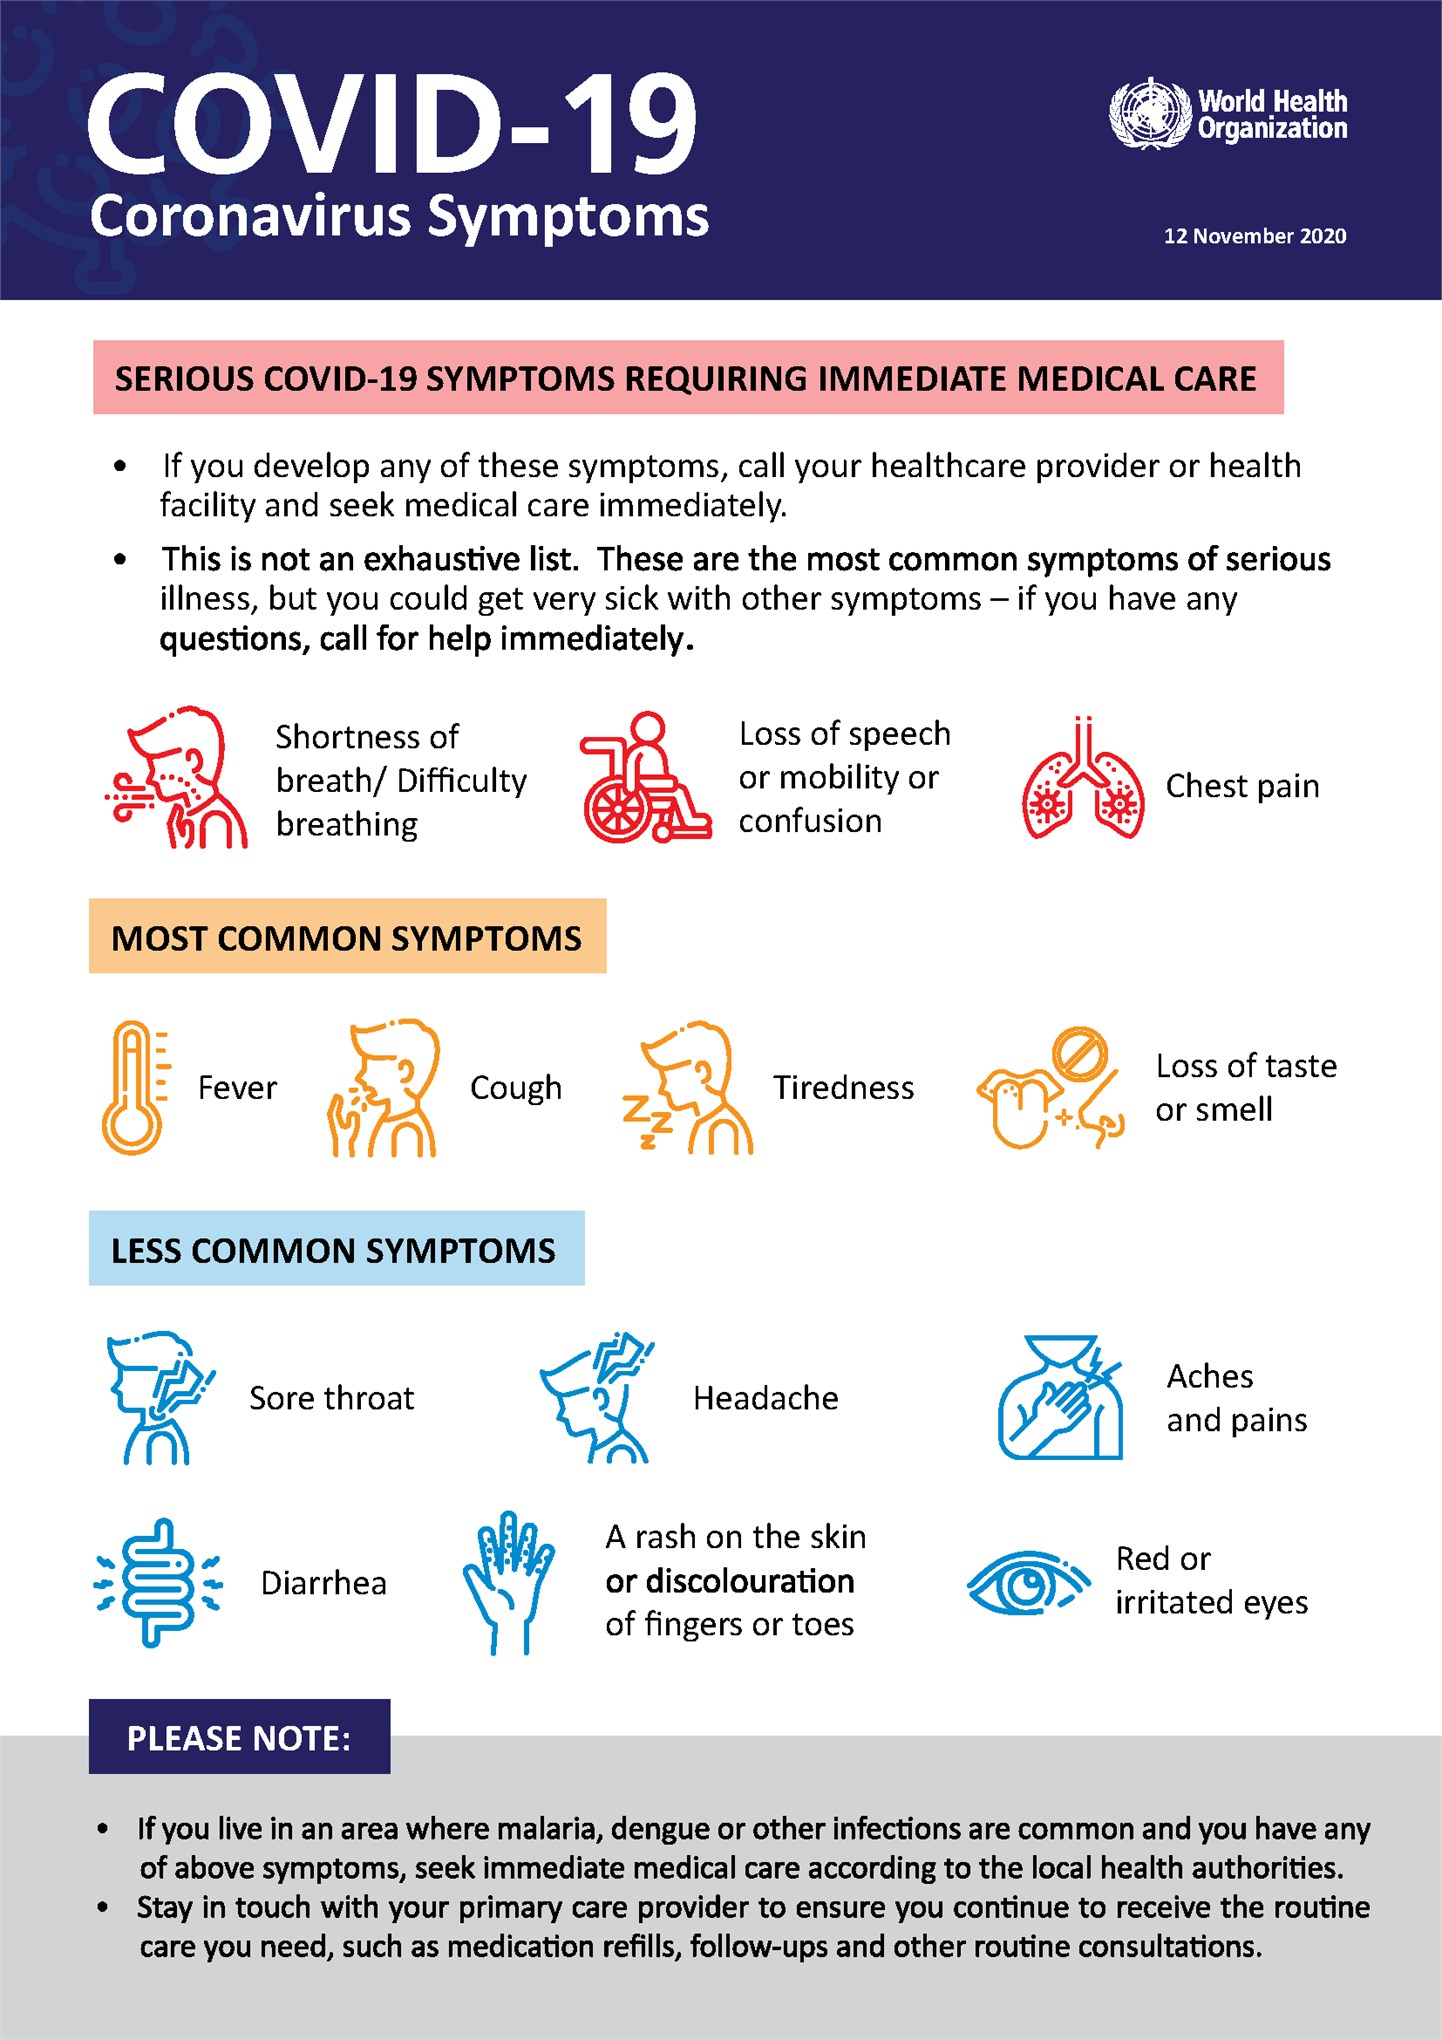 COVID-19 symptoms and flu